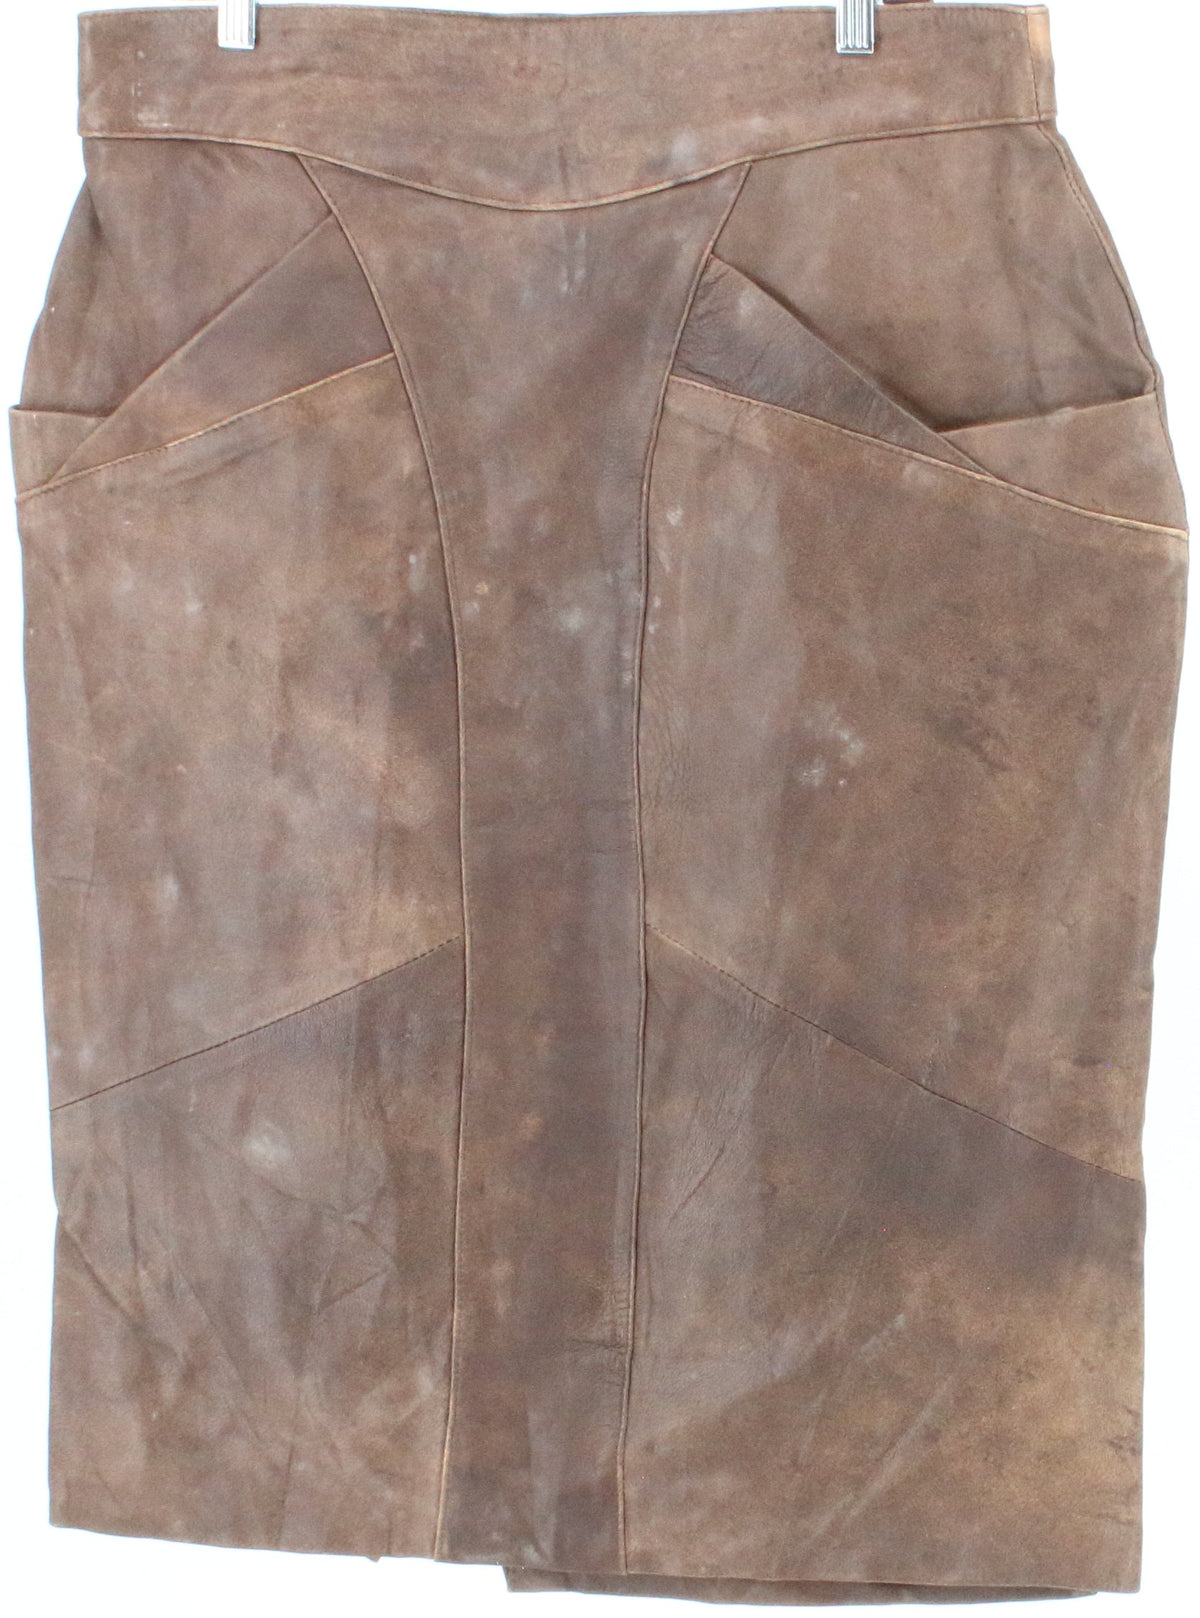 Farra Fashion Brown Leather Skirt